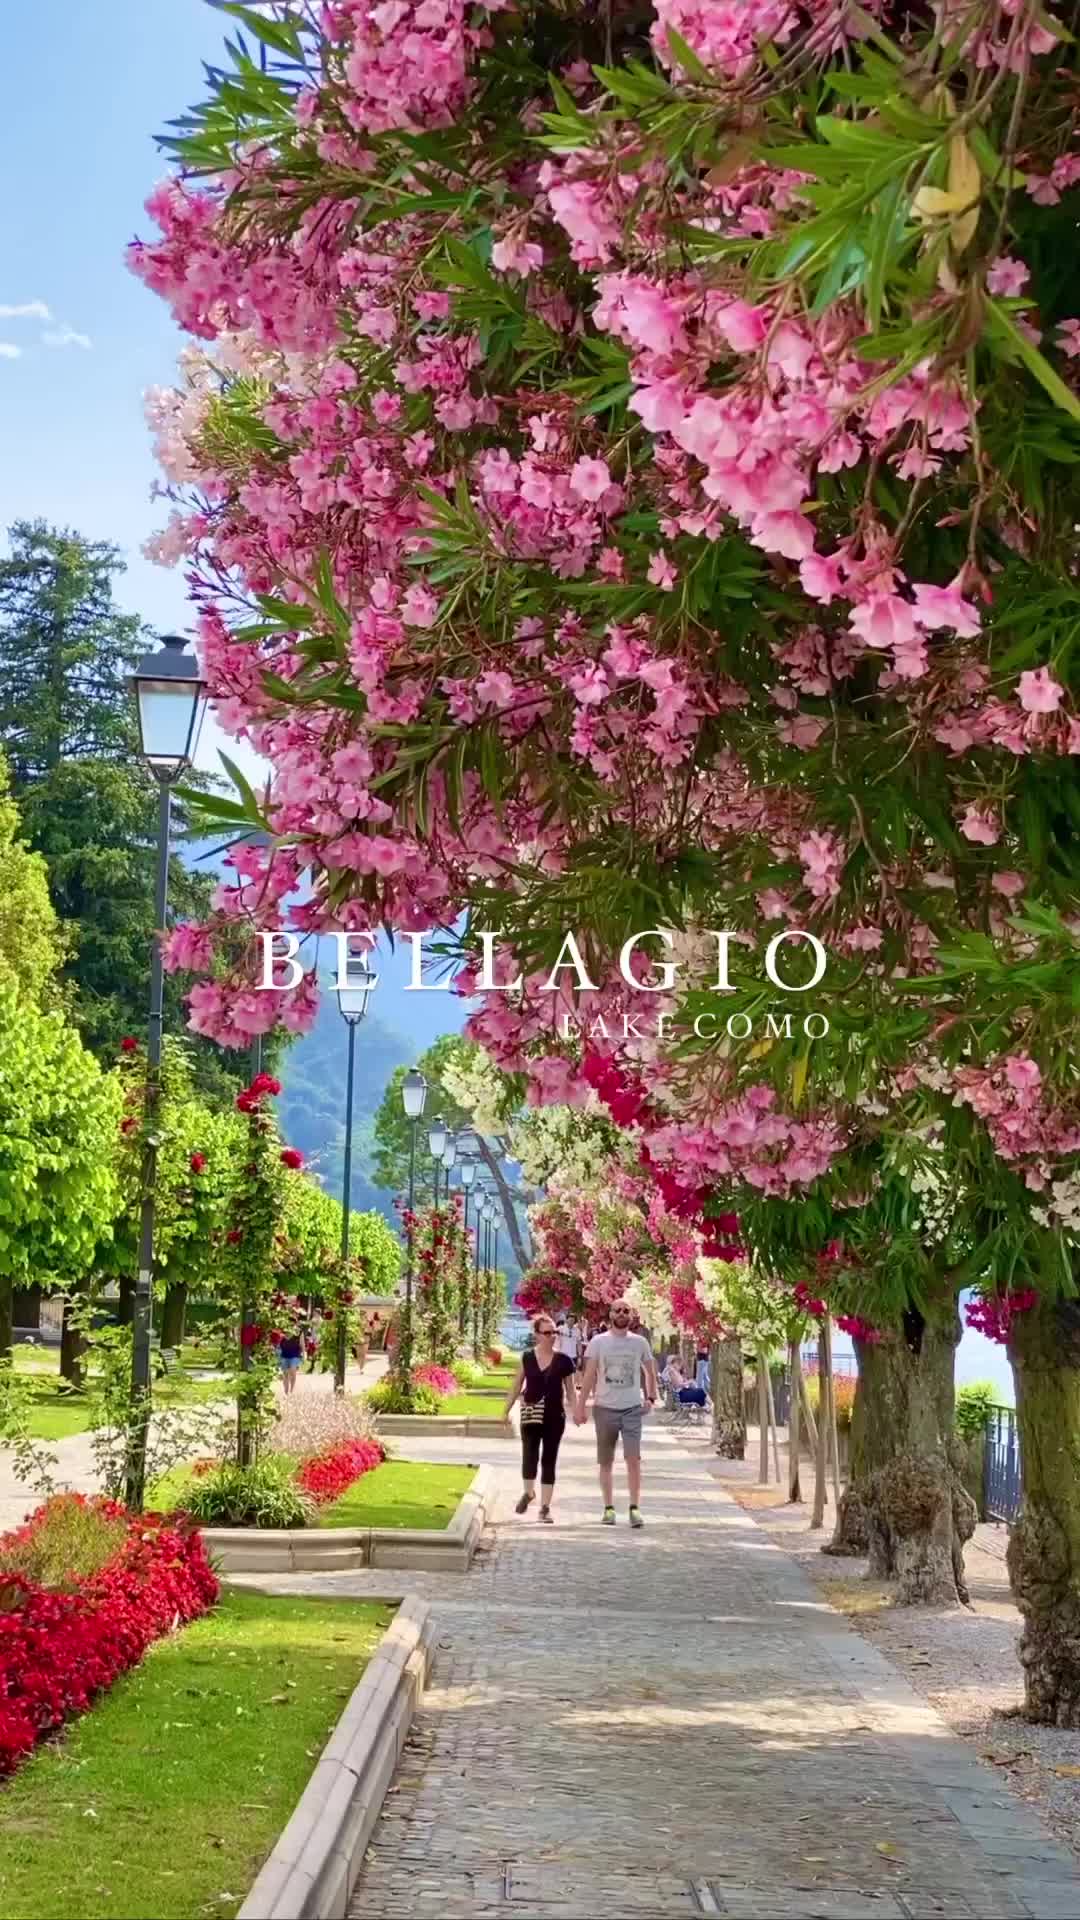 The charm of #Bellagio 🌸

#lagodicomo #lakecomo #comolake #italia #italy